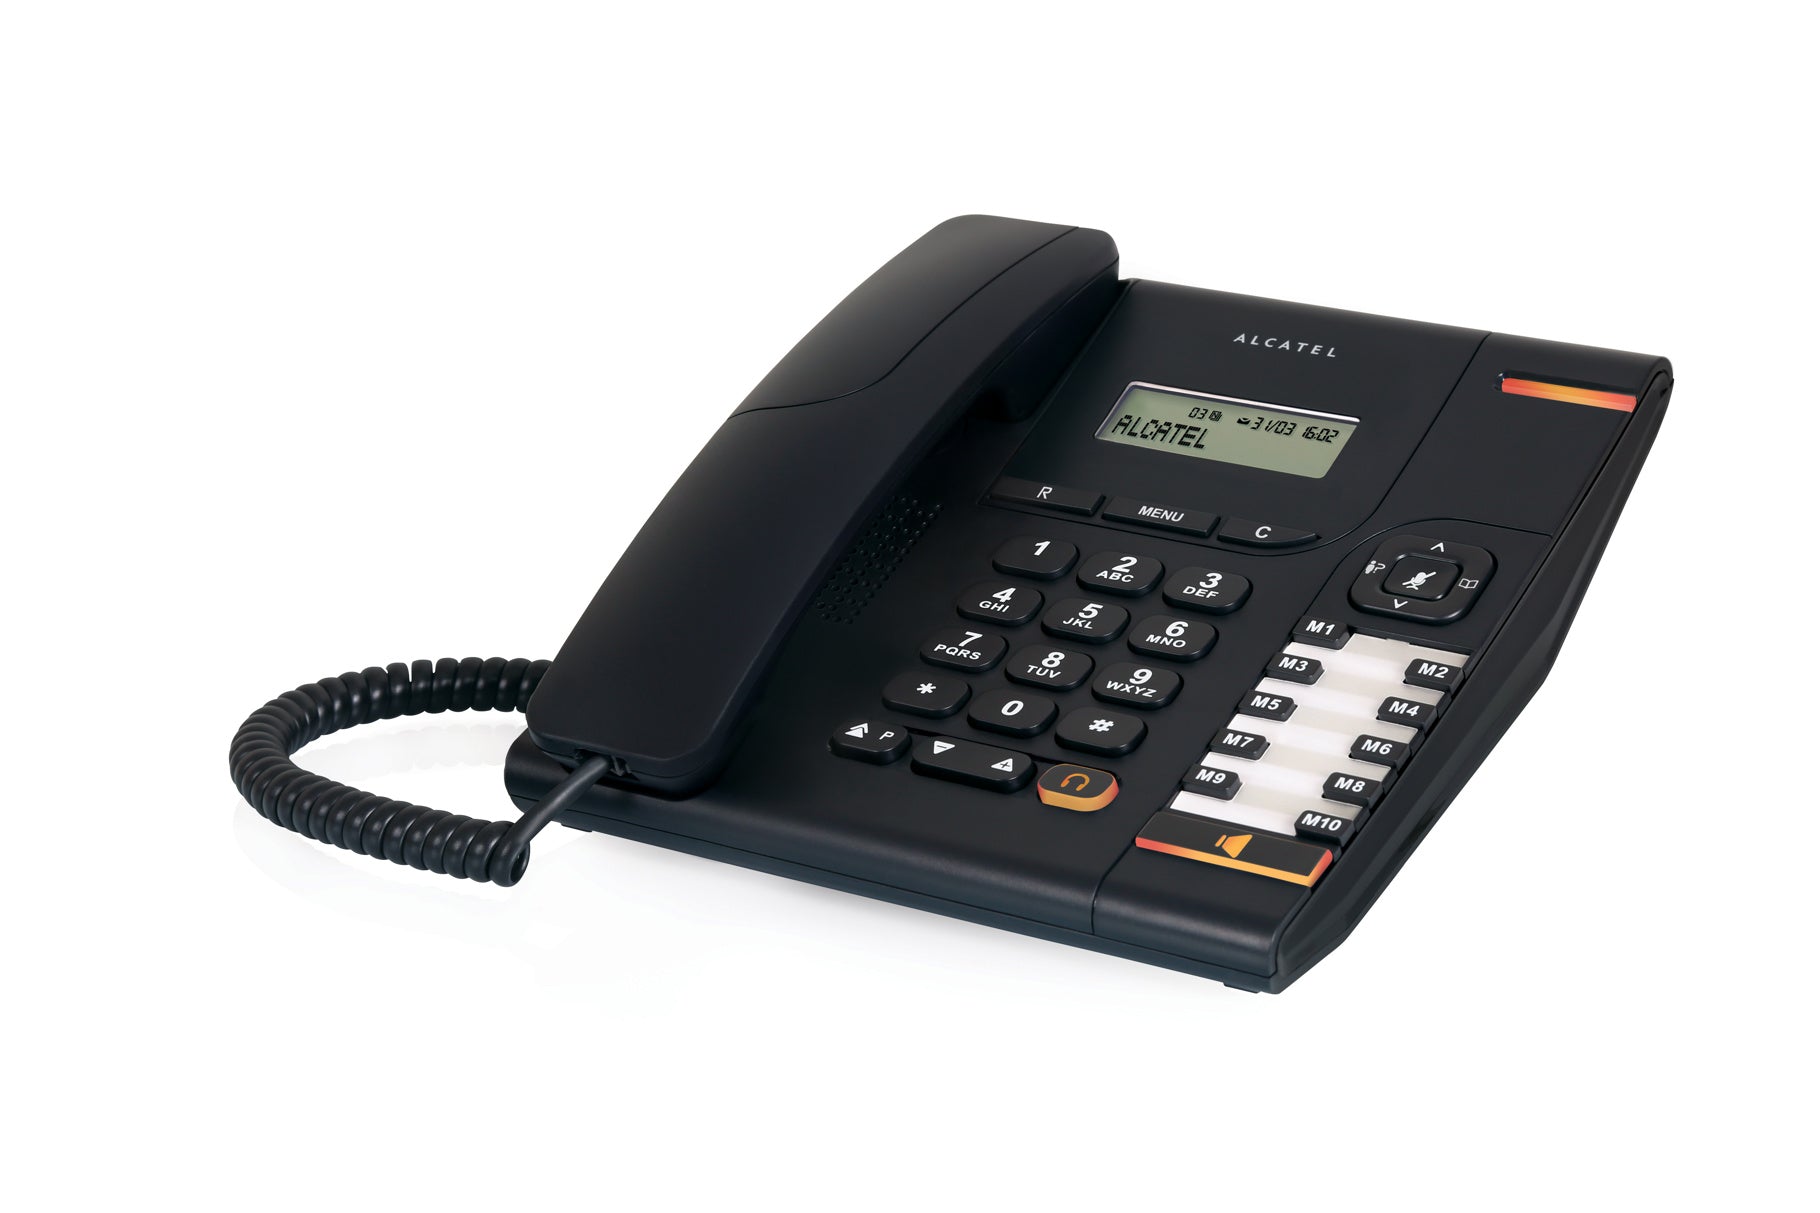 Alcatel Temporis 580 Analogue Phone in Black